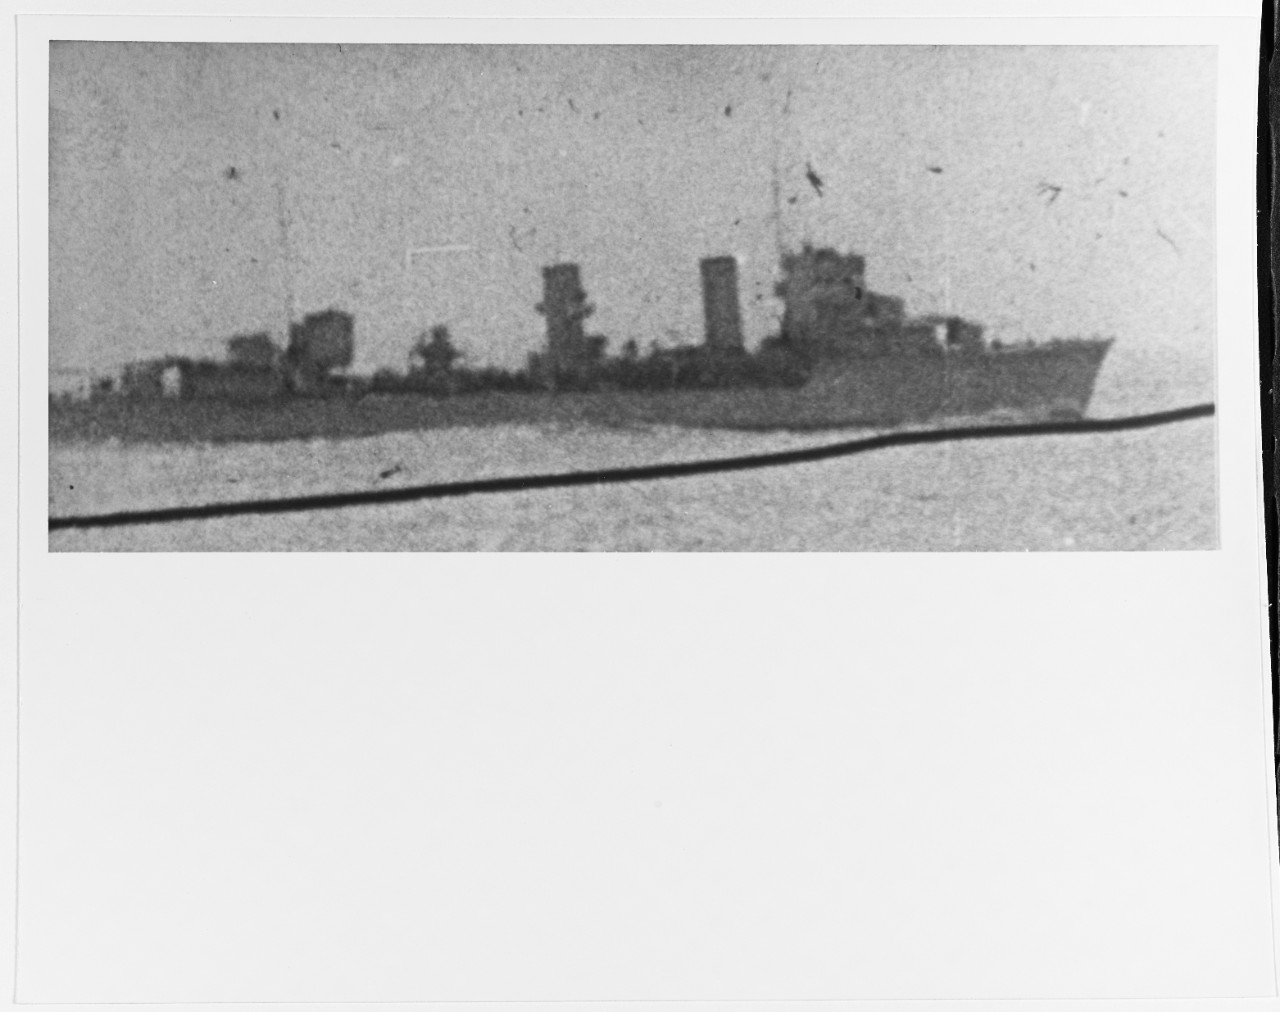 DUBROVNIK (YUGOSLAVIAN Destroyer, 1931-1945)